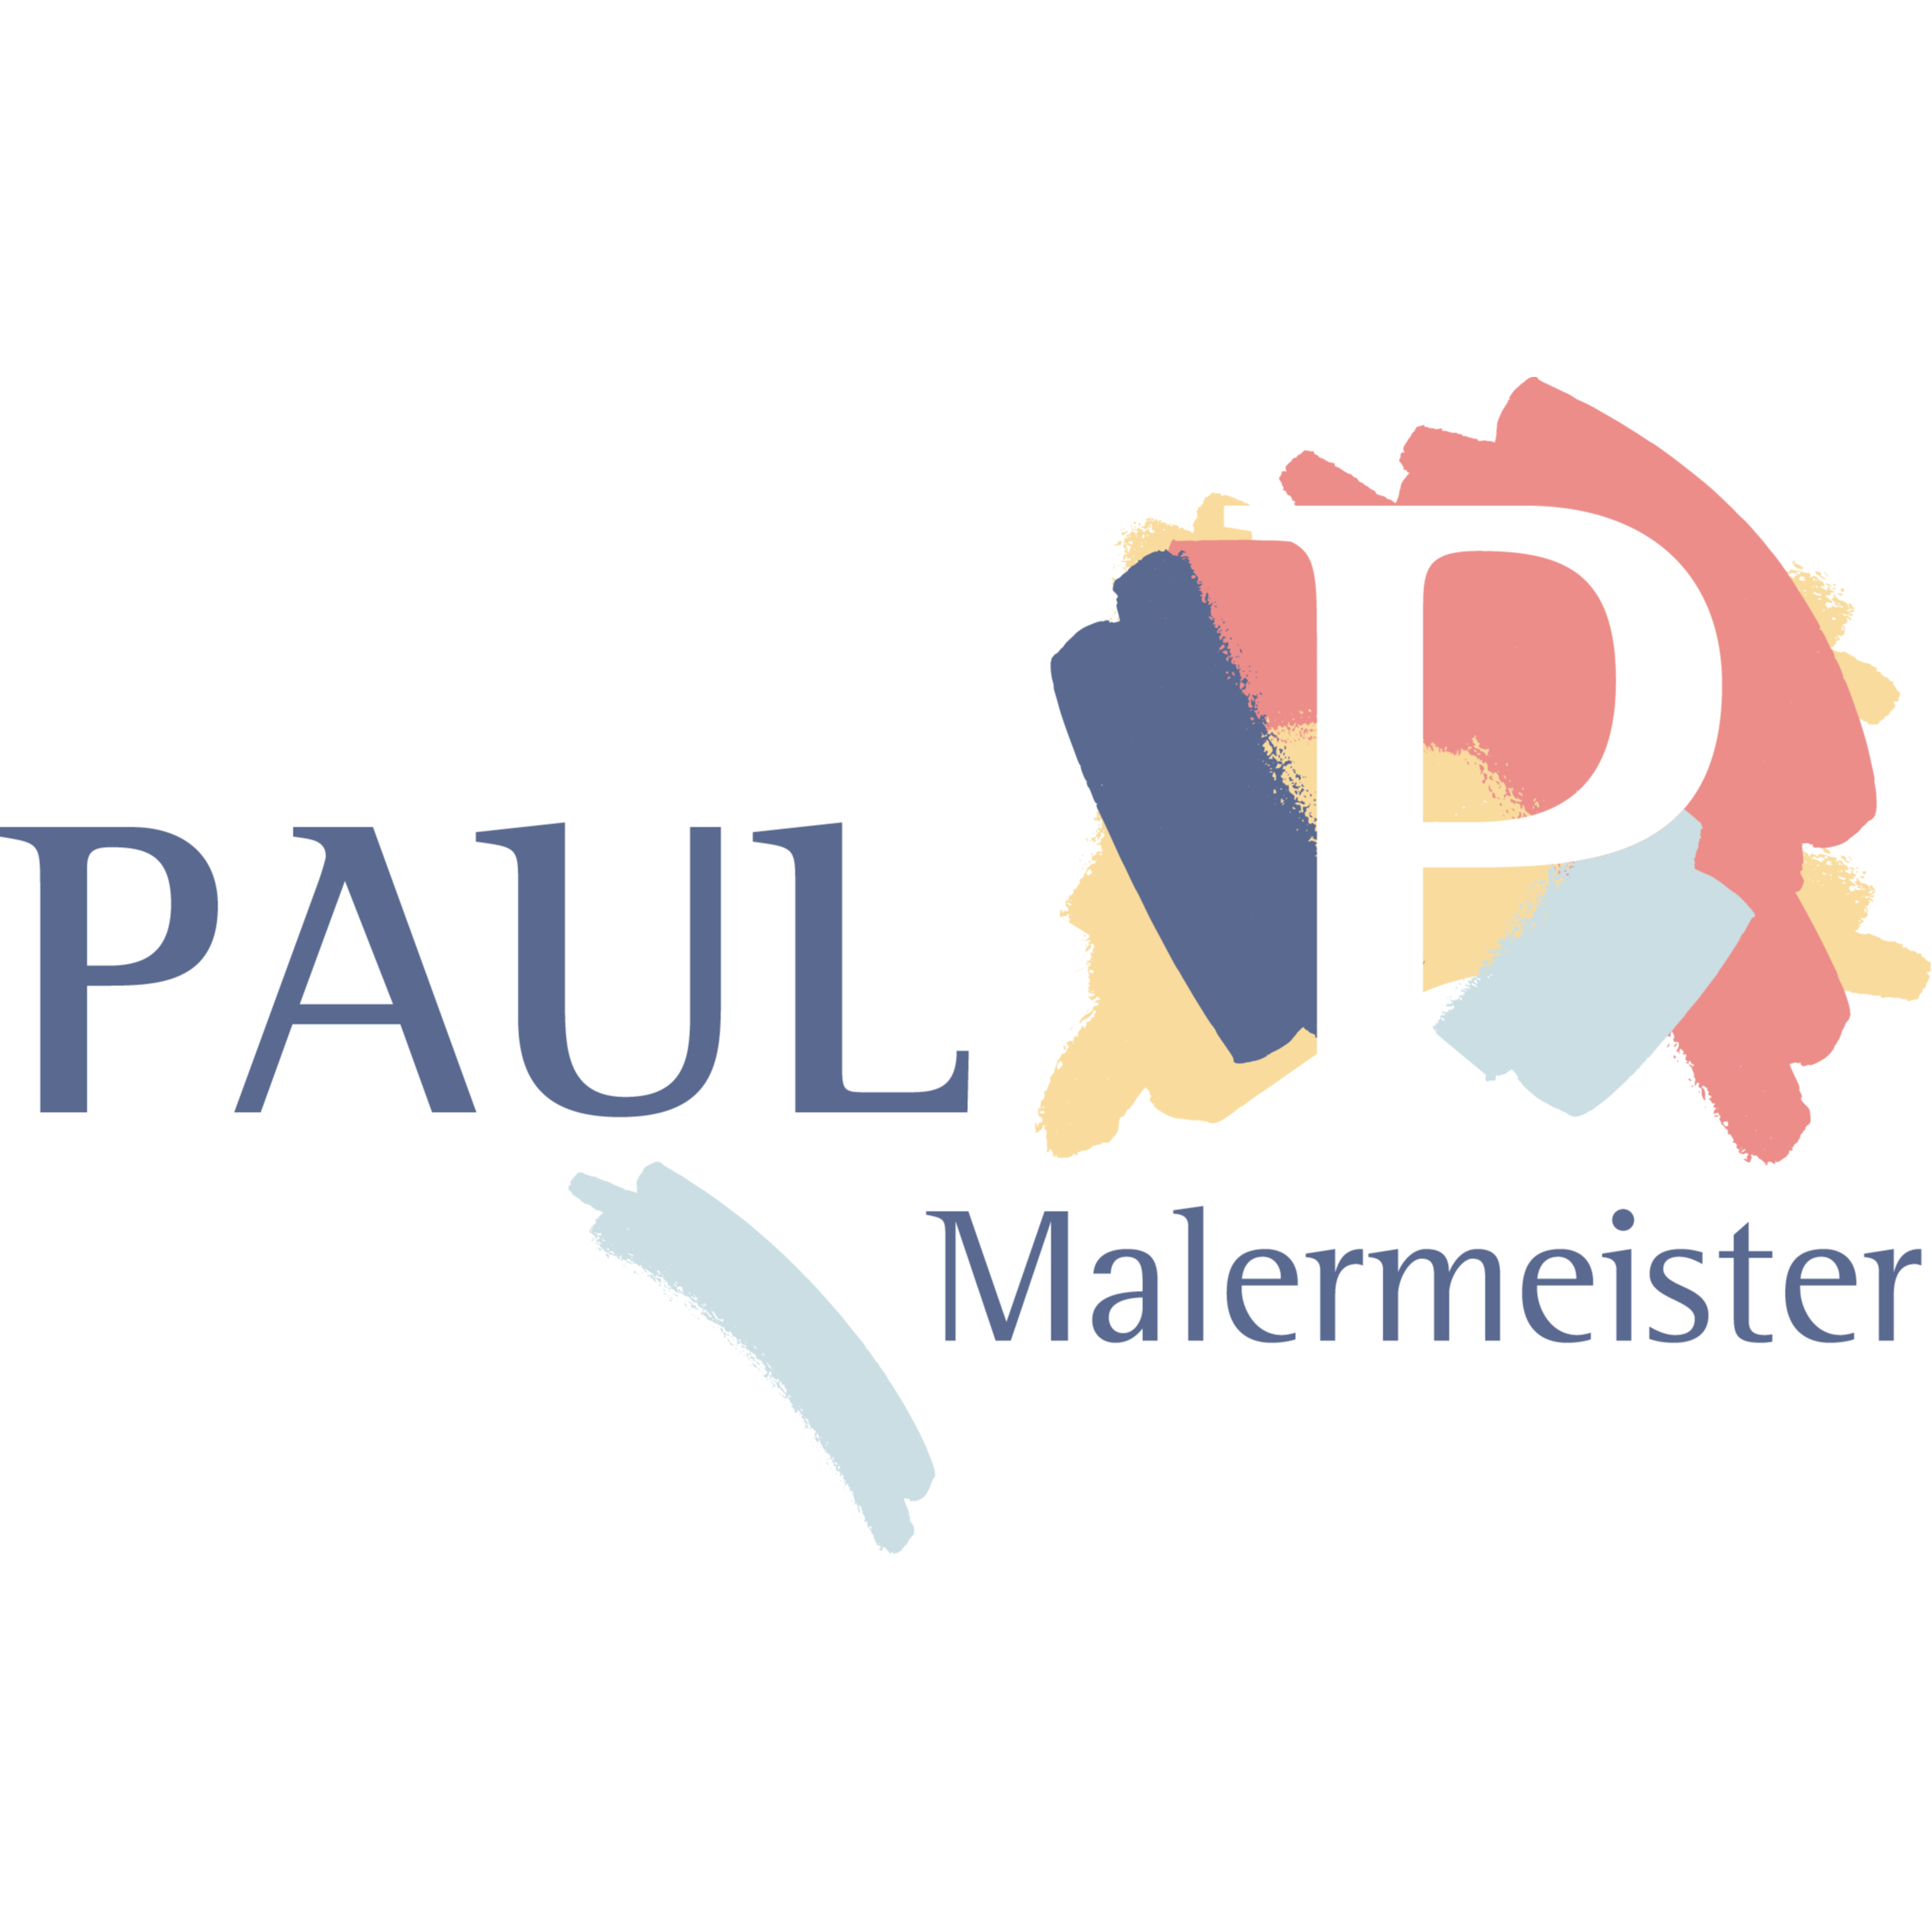 Malermeister Artjom Paul in Neuenkirchen Kreis Steinfurt - Logo